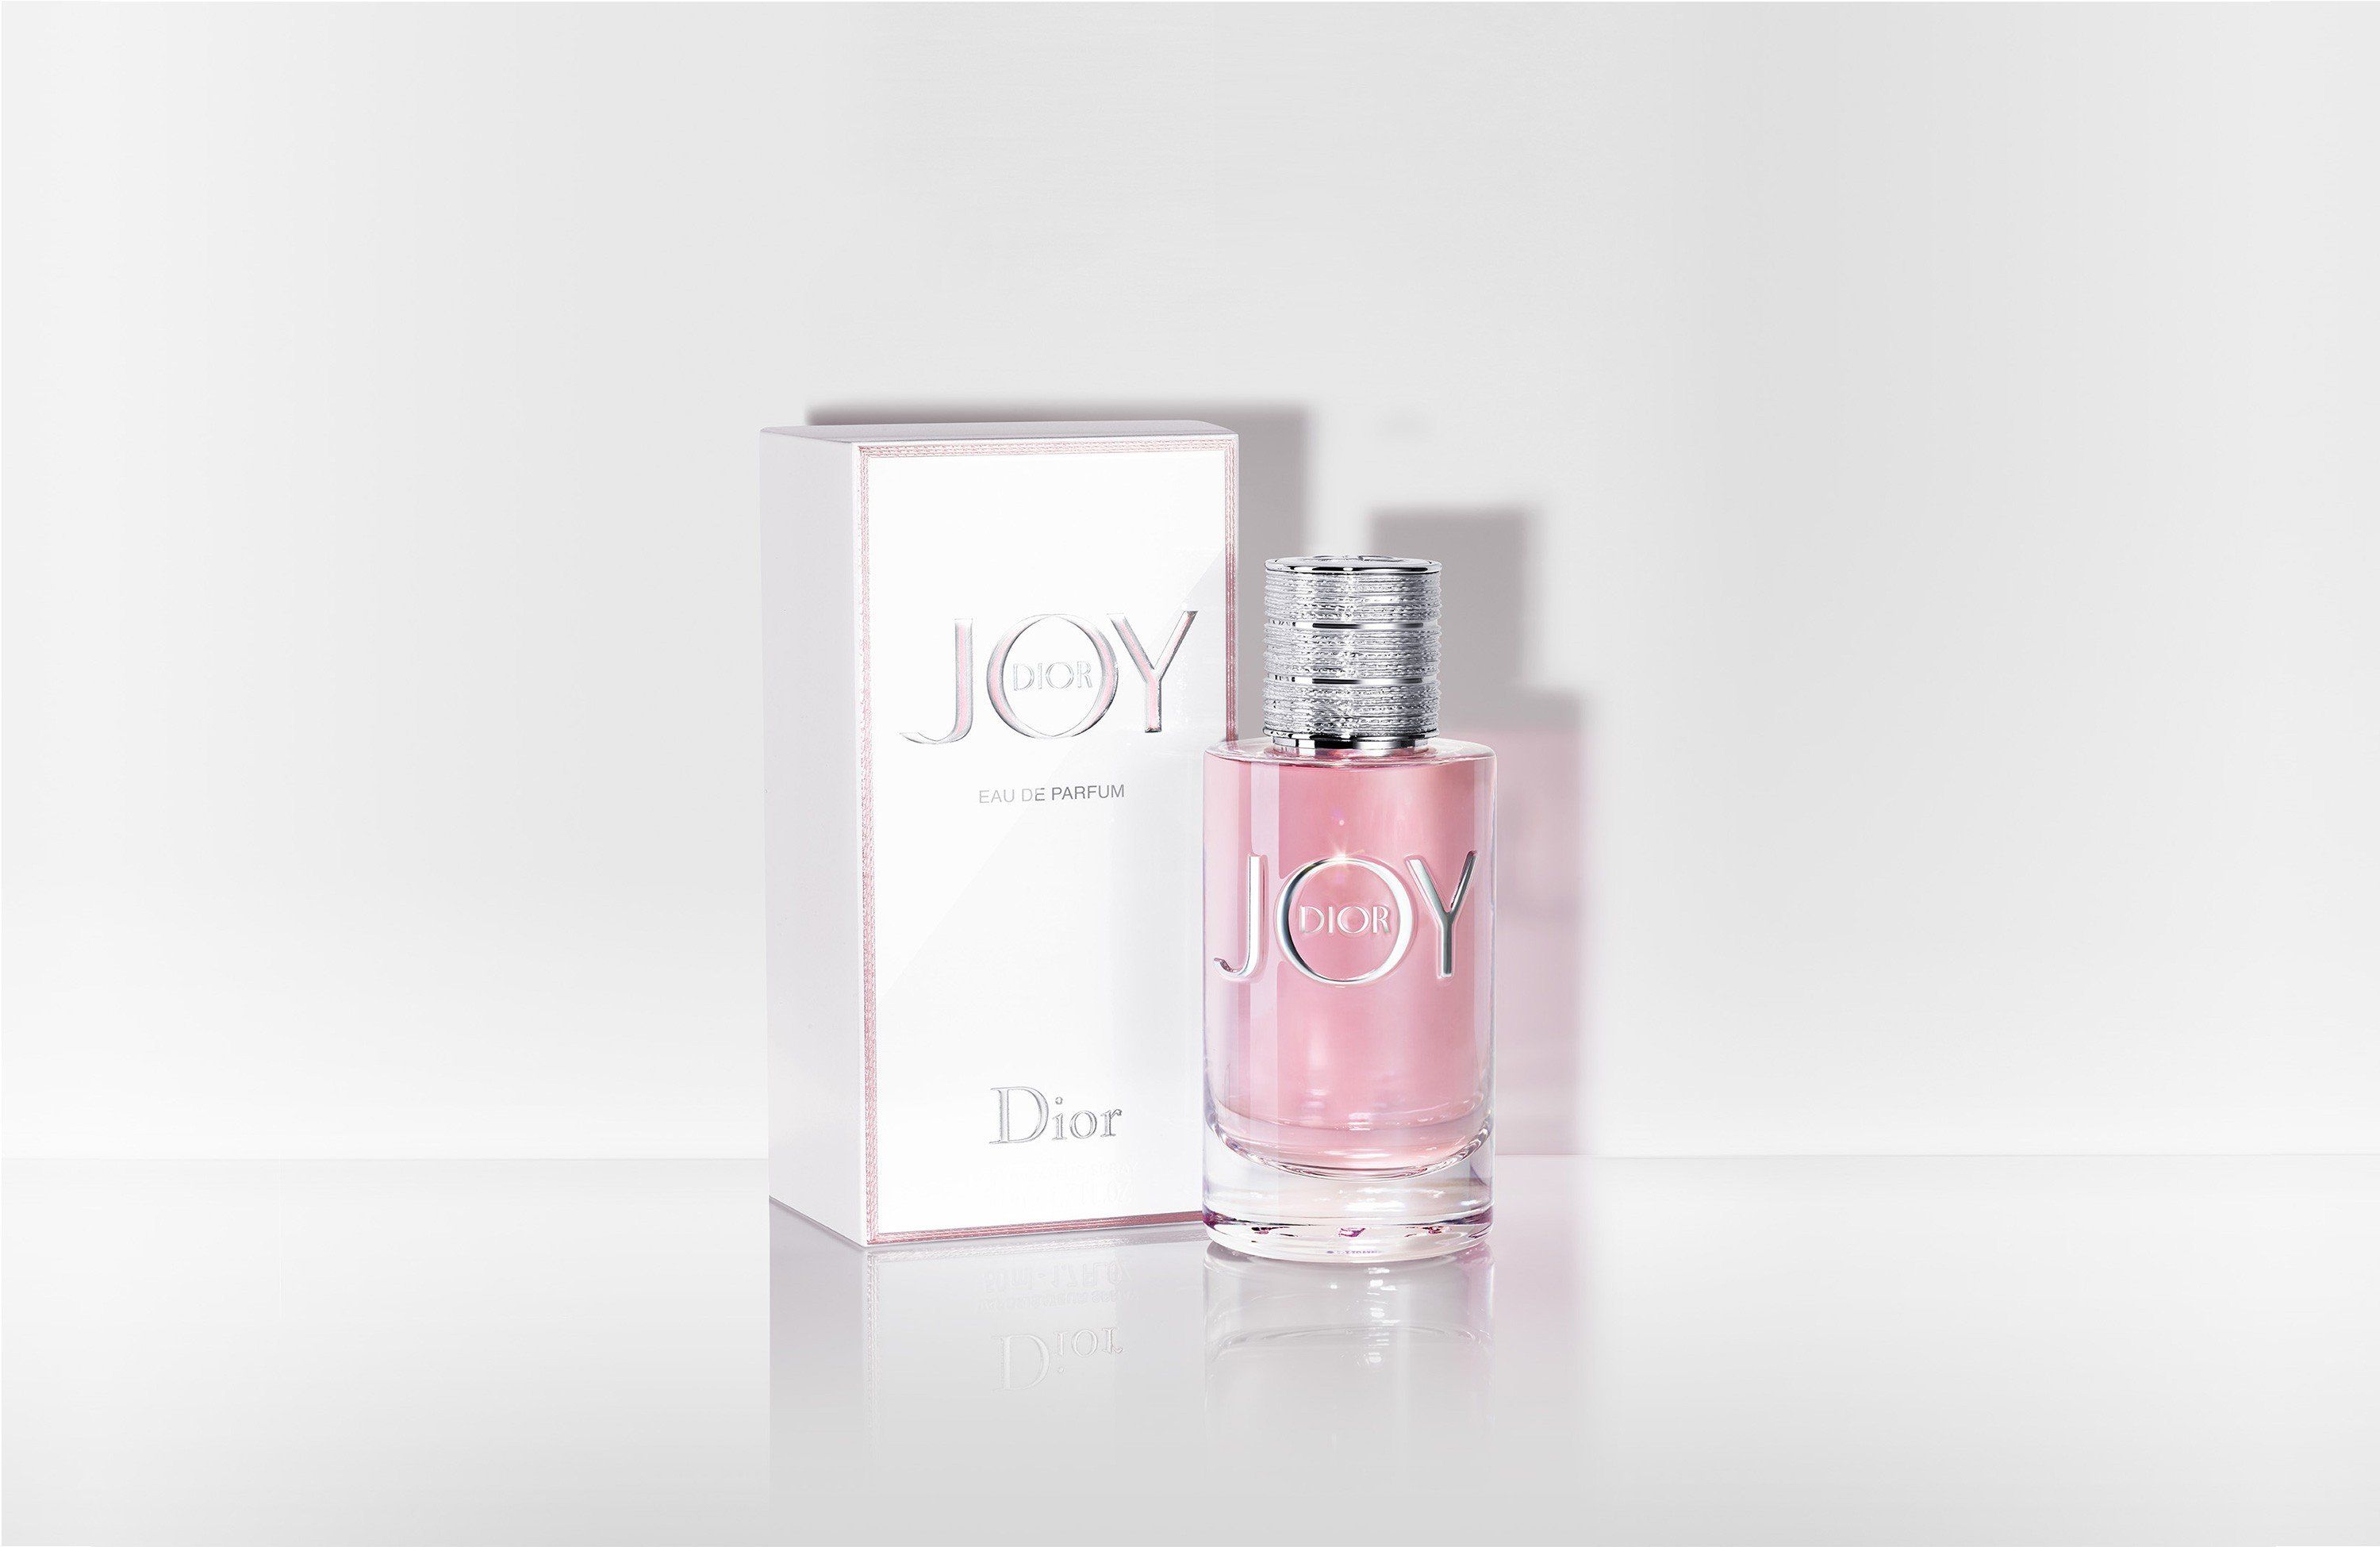 perfume called joy